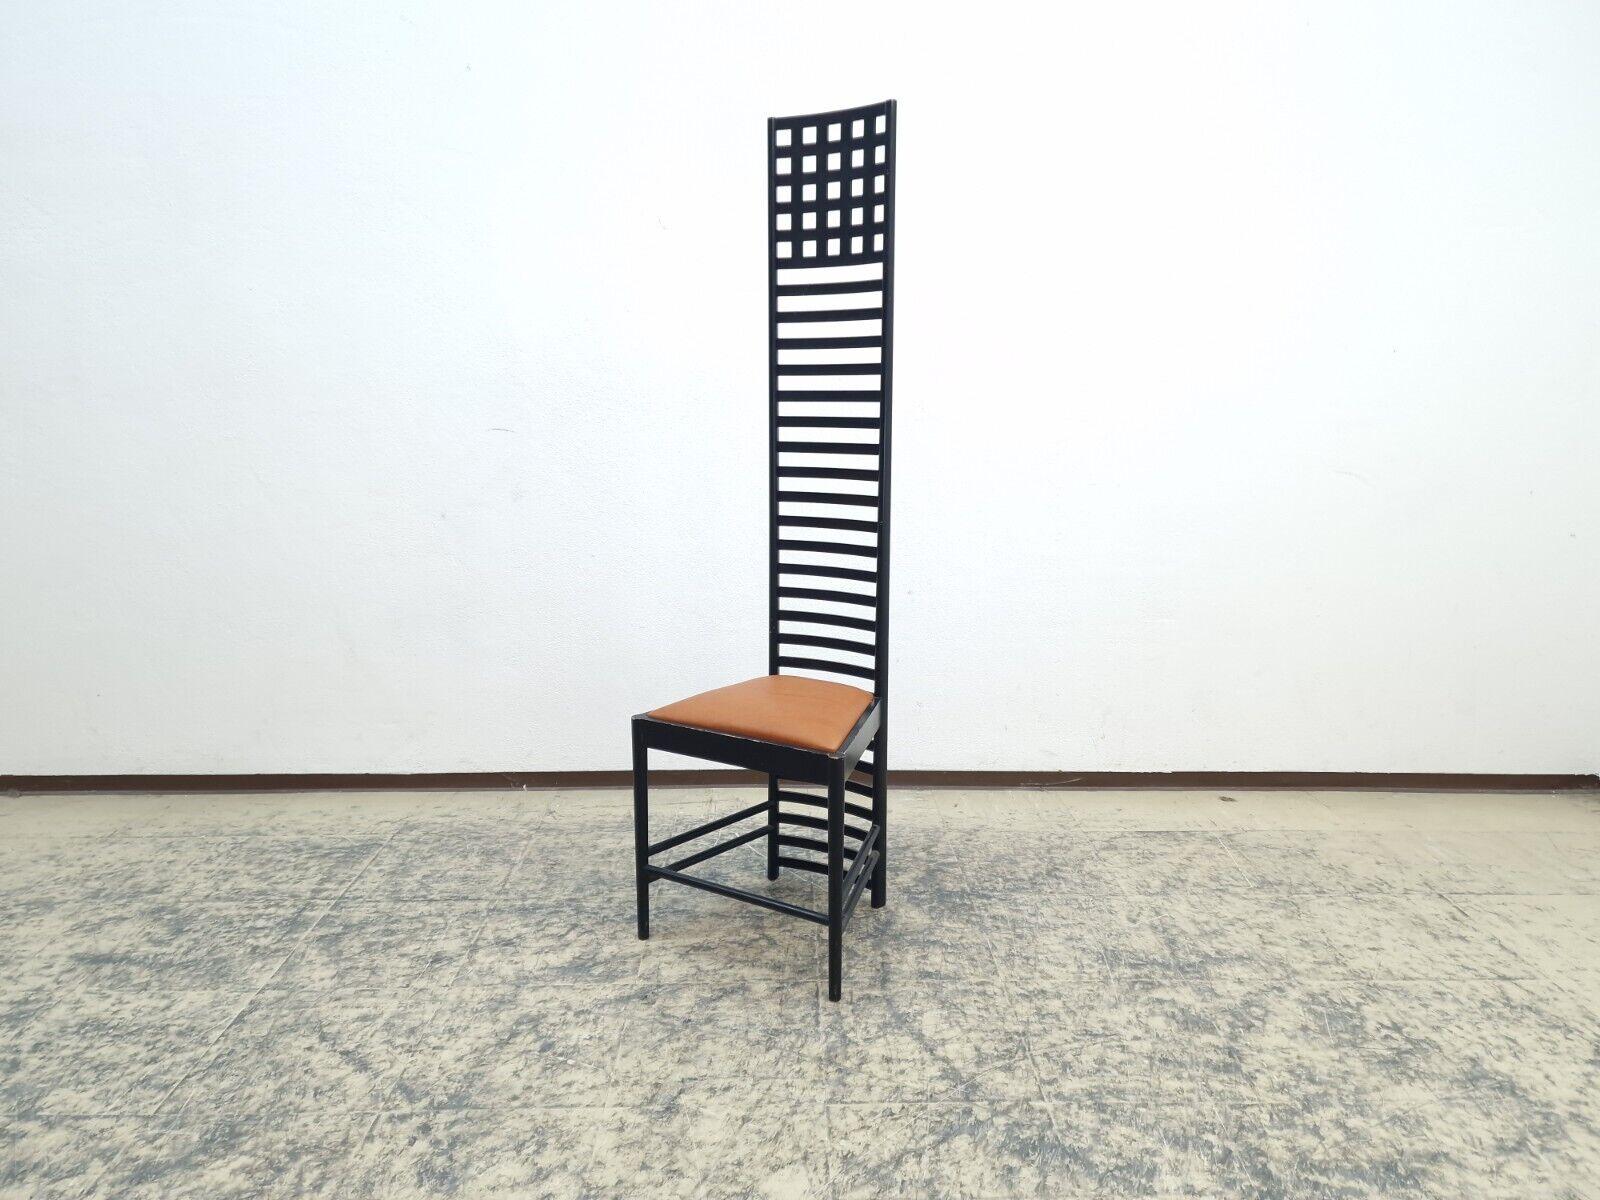 Cassina Rennie Mackintosh Holzstuhl Designerstuhl Hill House chair For Sale 3